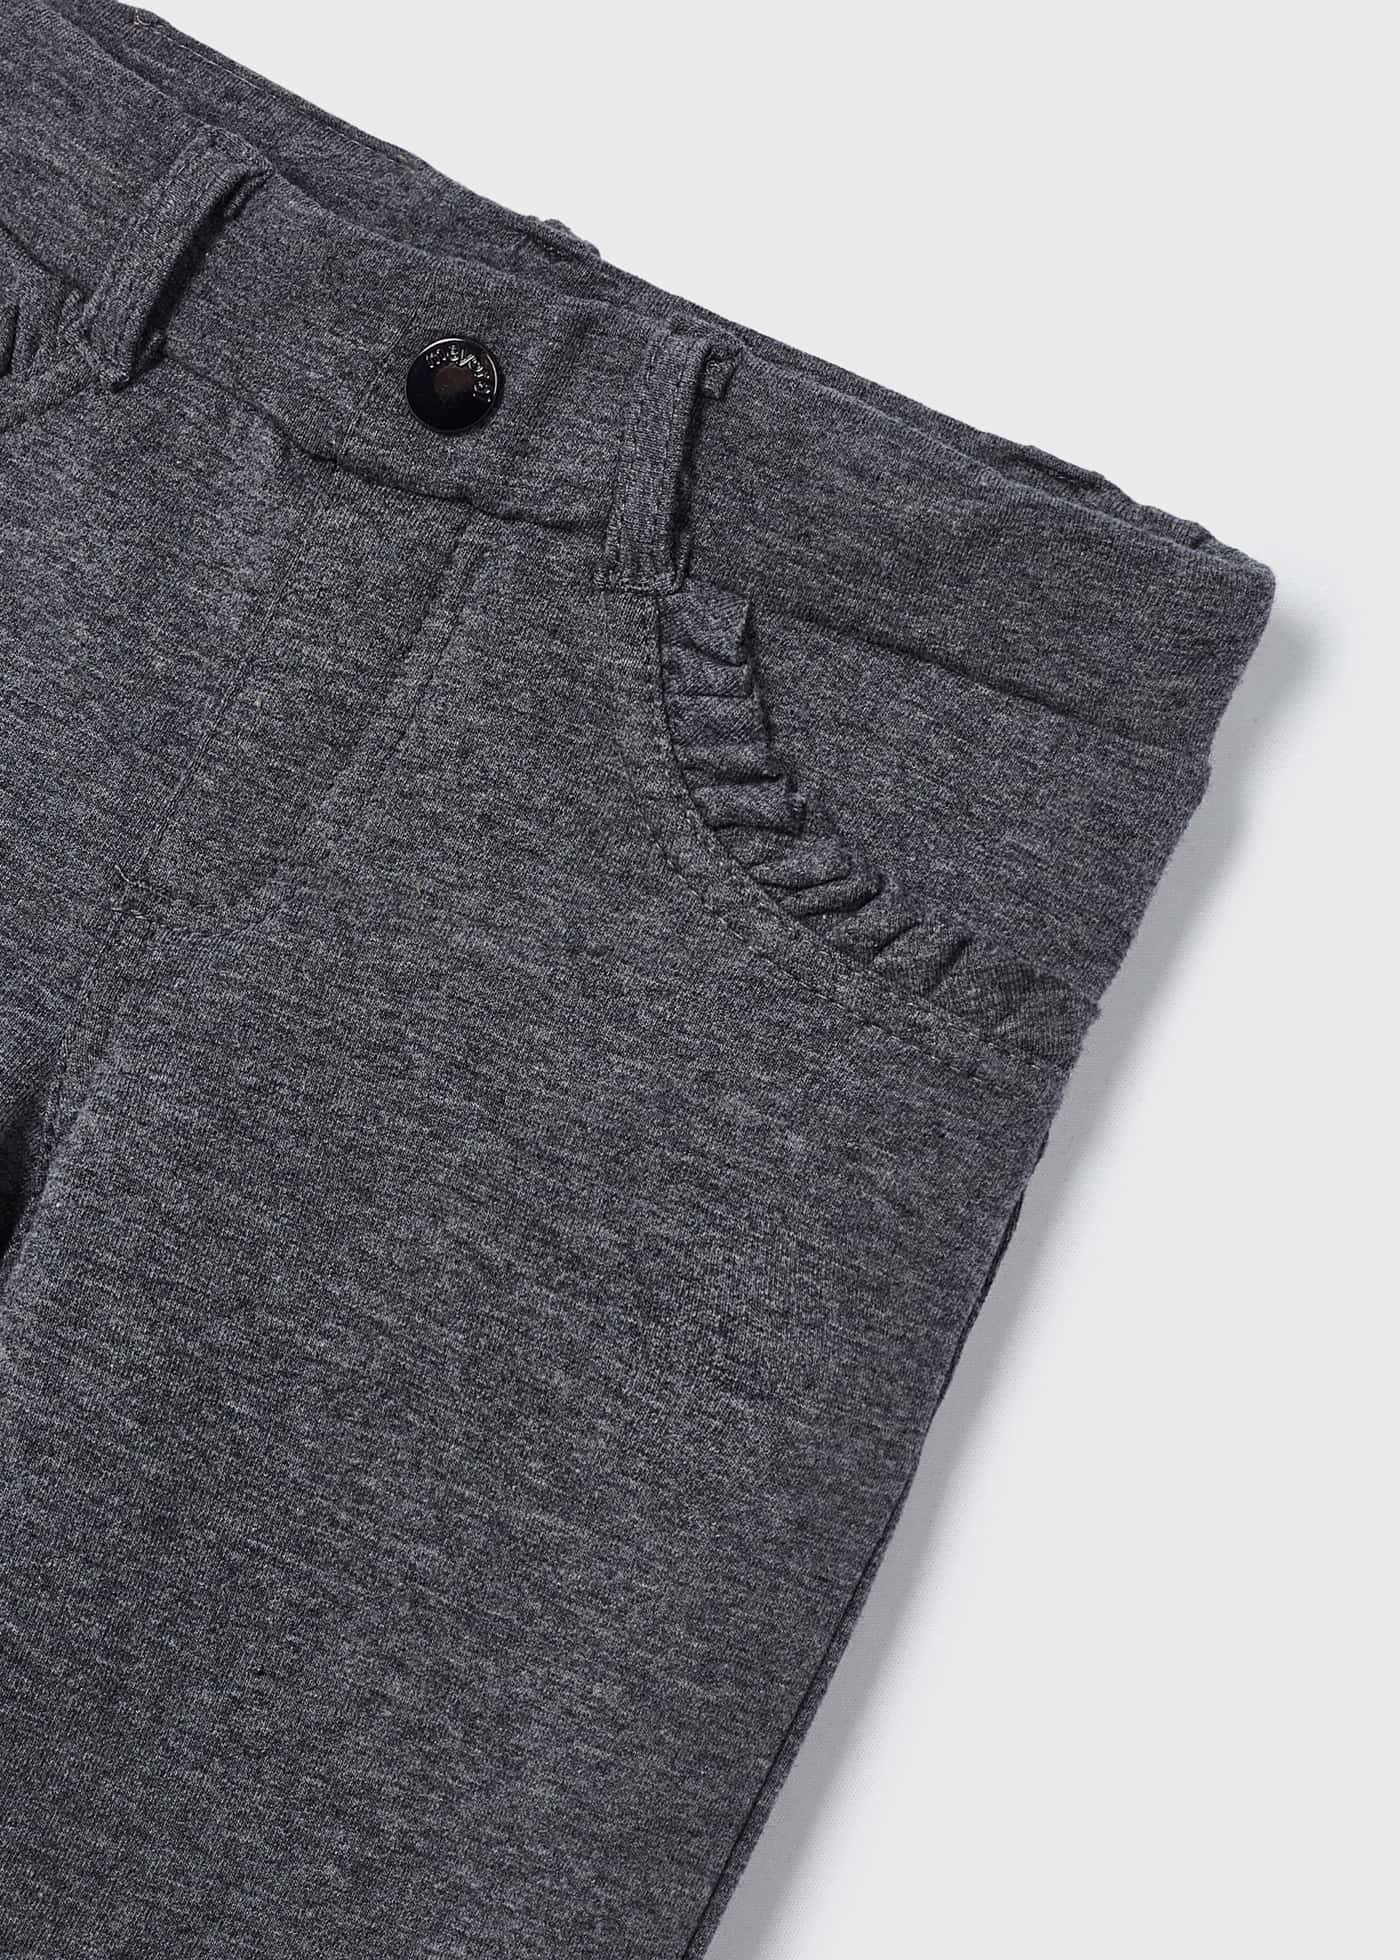 ASOS DESIGN super skinny smart pants in black | Smart Closet